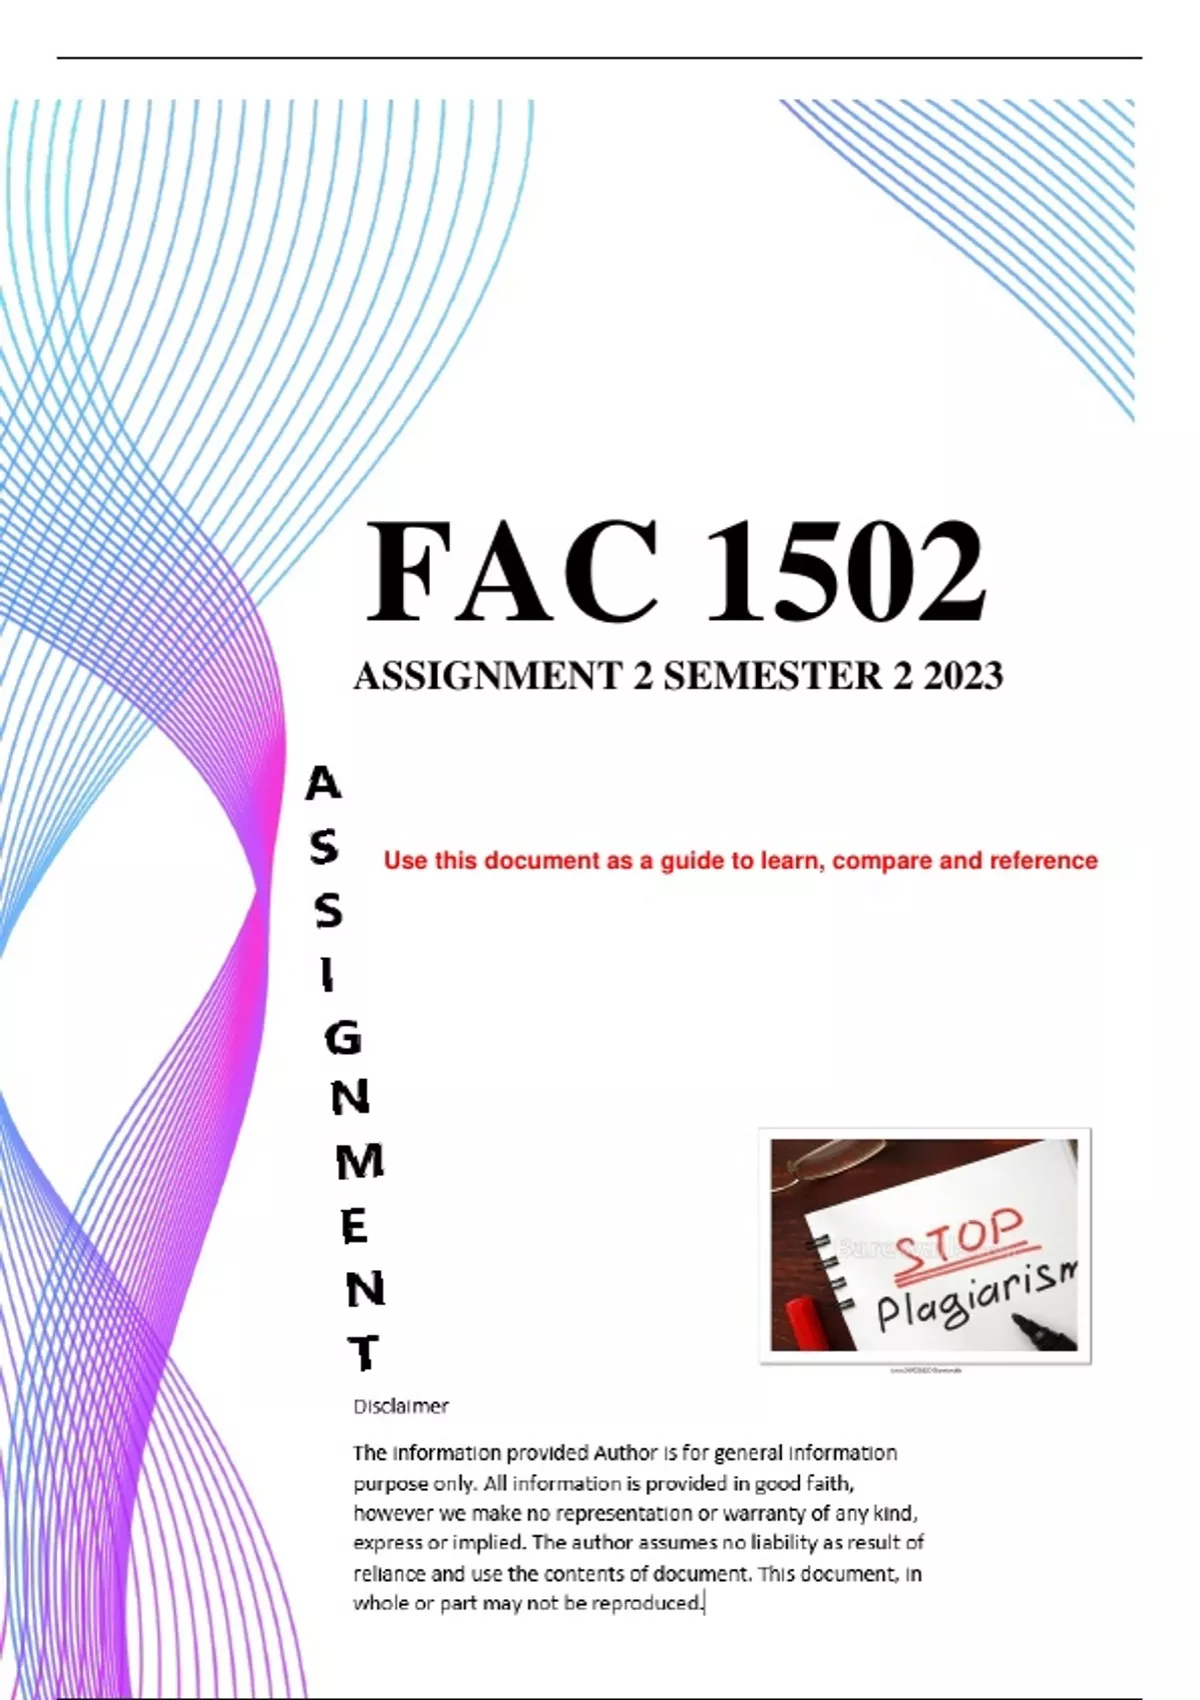 fac1502 assignment 3 2023